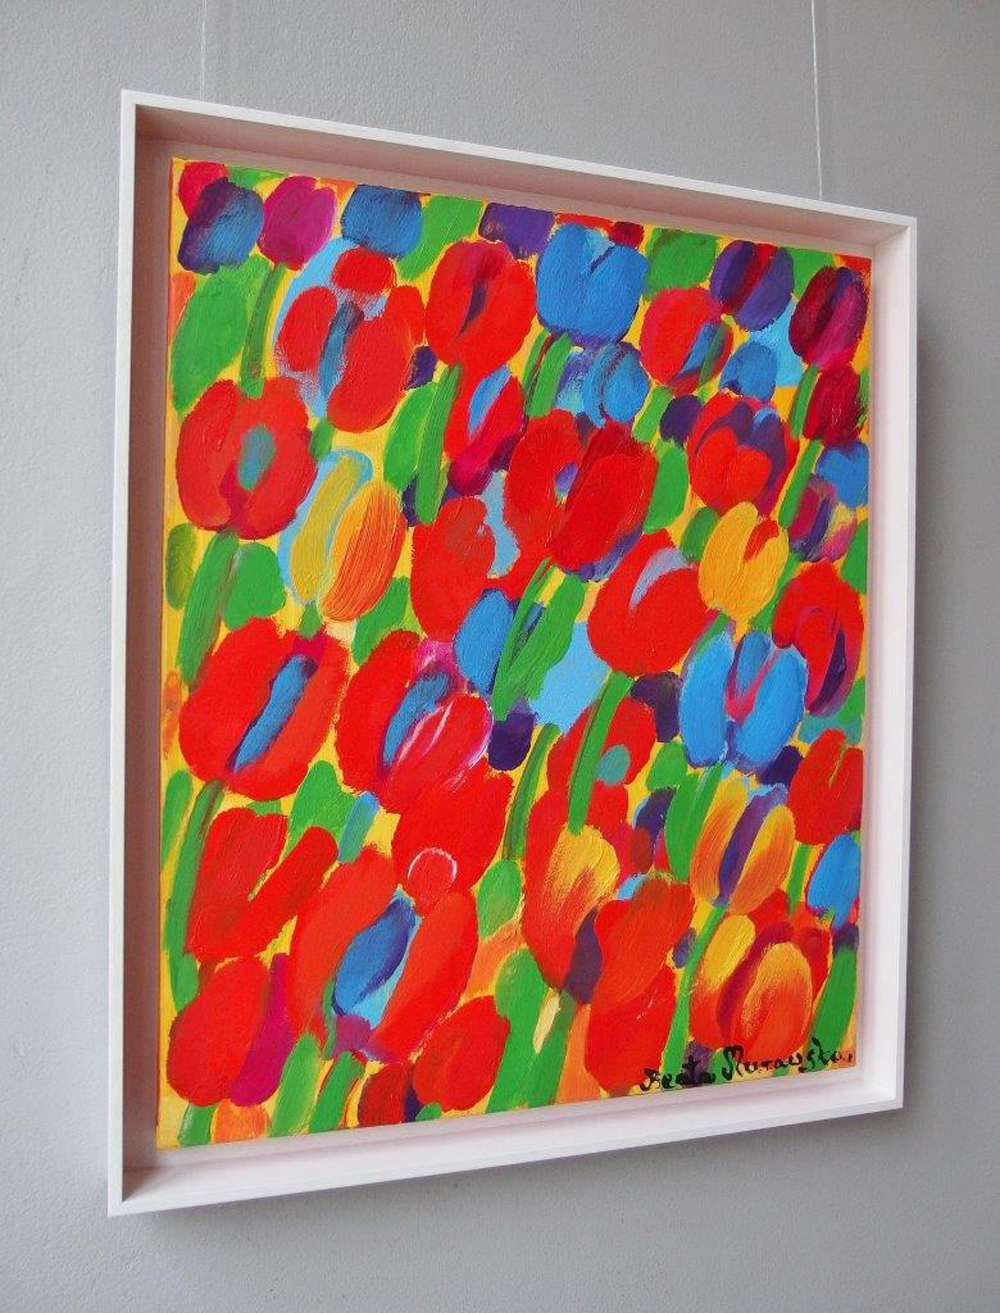 Beata Murawska - Red desire (Oil on Canvas | Size: 56 x 66 cm | Price: 3500 PLN)